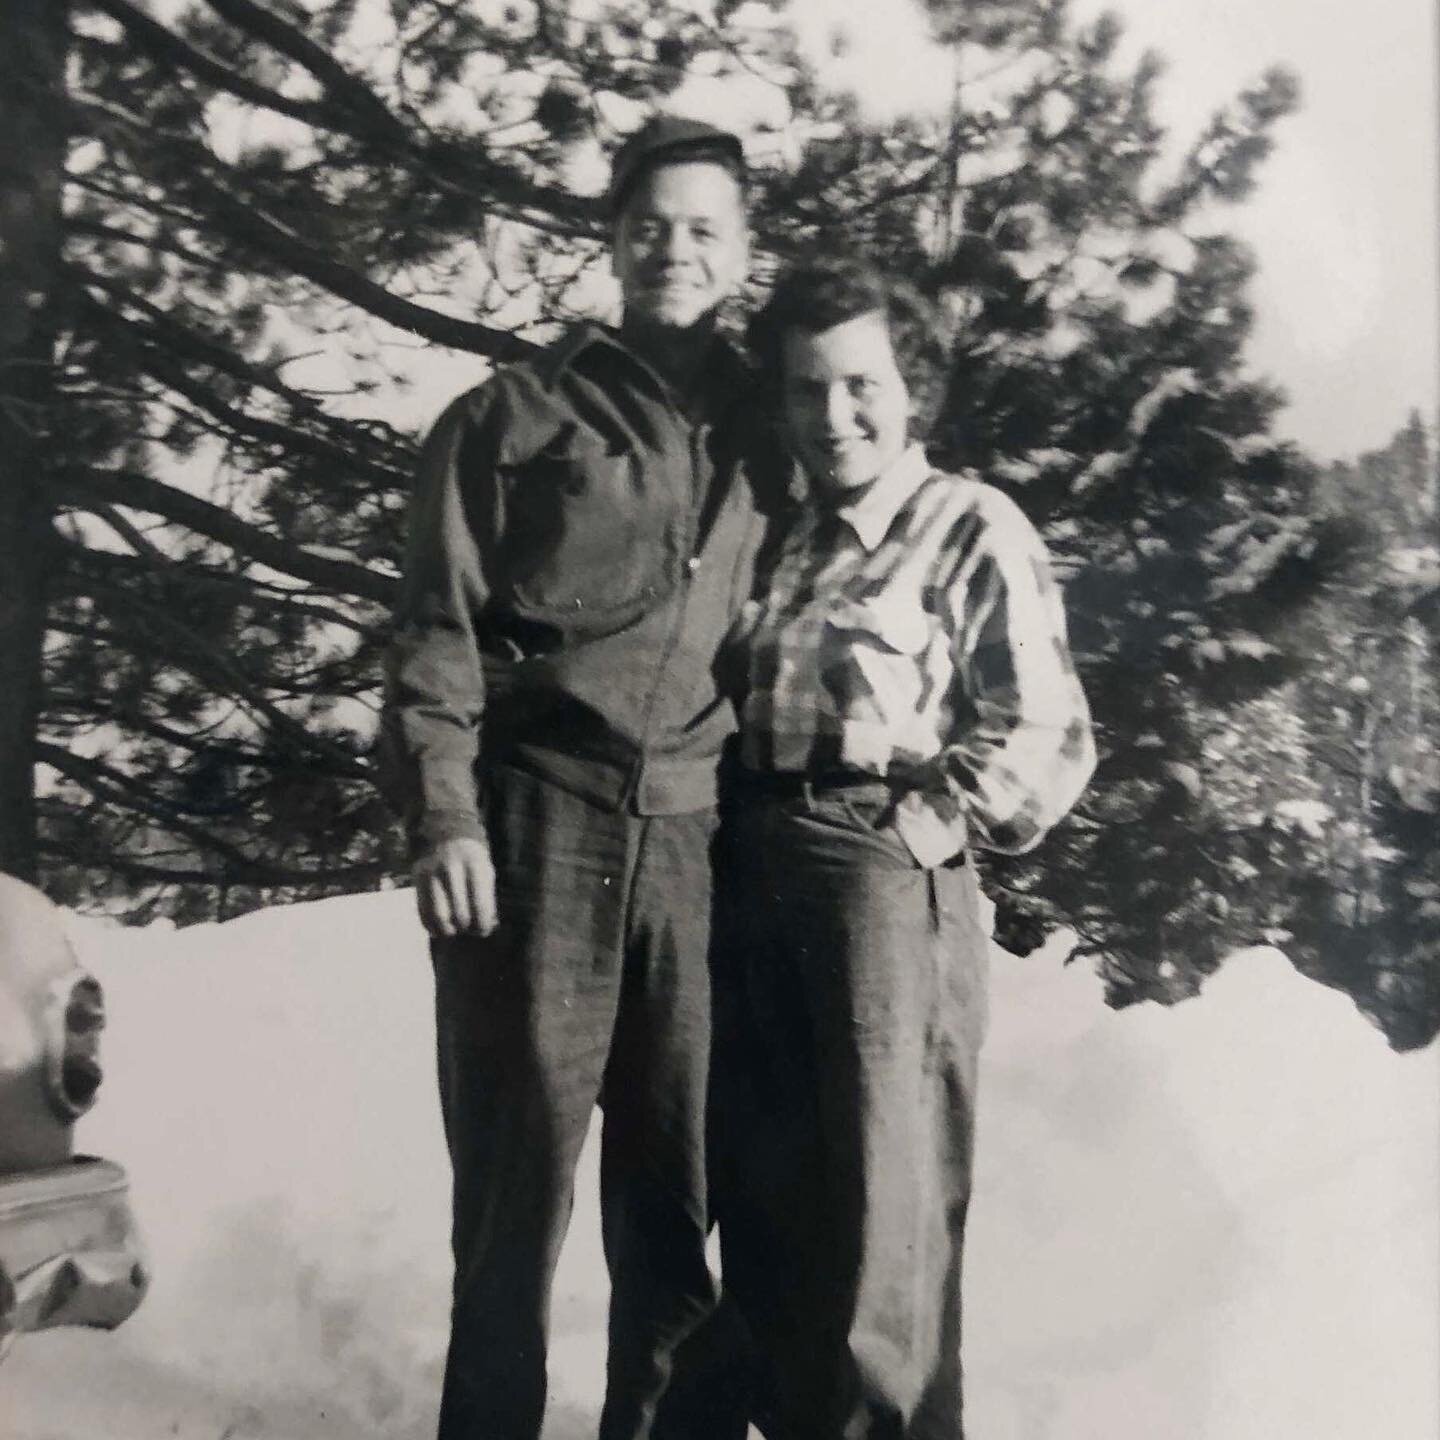 Came across this photo &amp; had to share it: My nana and grandpa in Yosemite, California. Circa 1950. #love #marriage